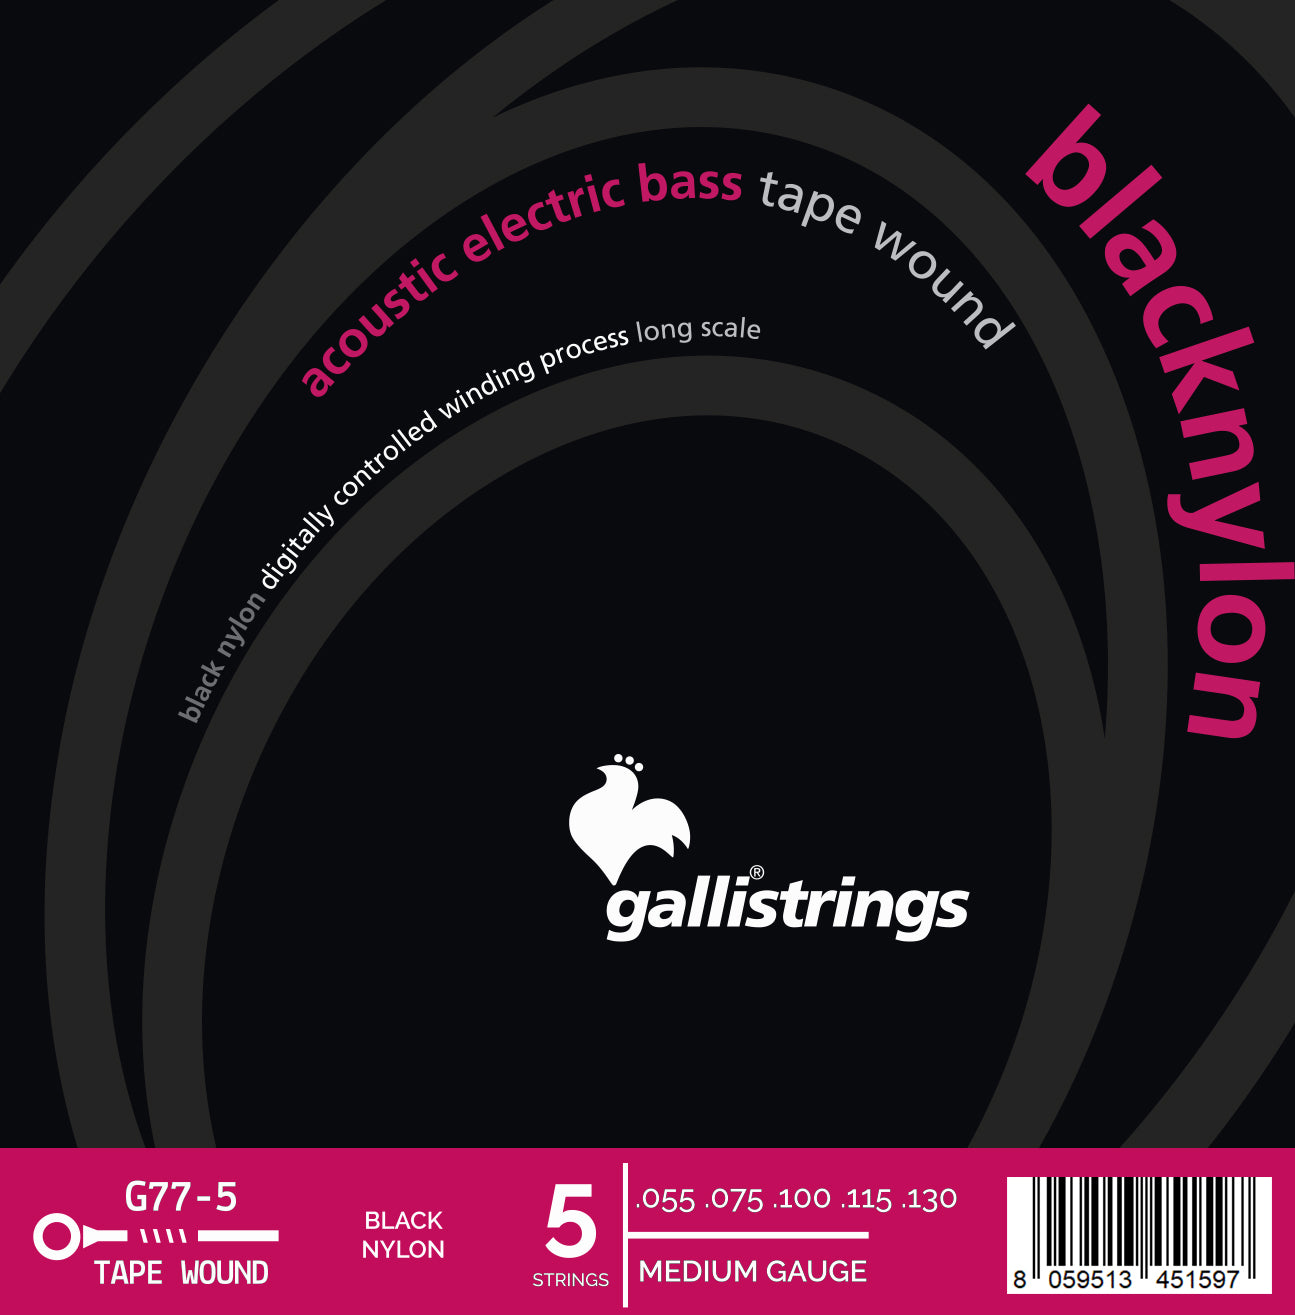 Black Nylon Tape Wound - 5 Strings